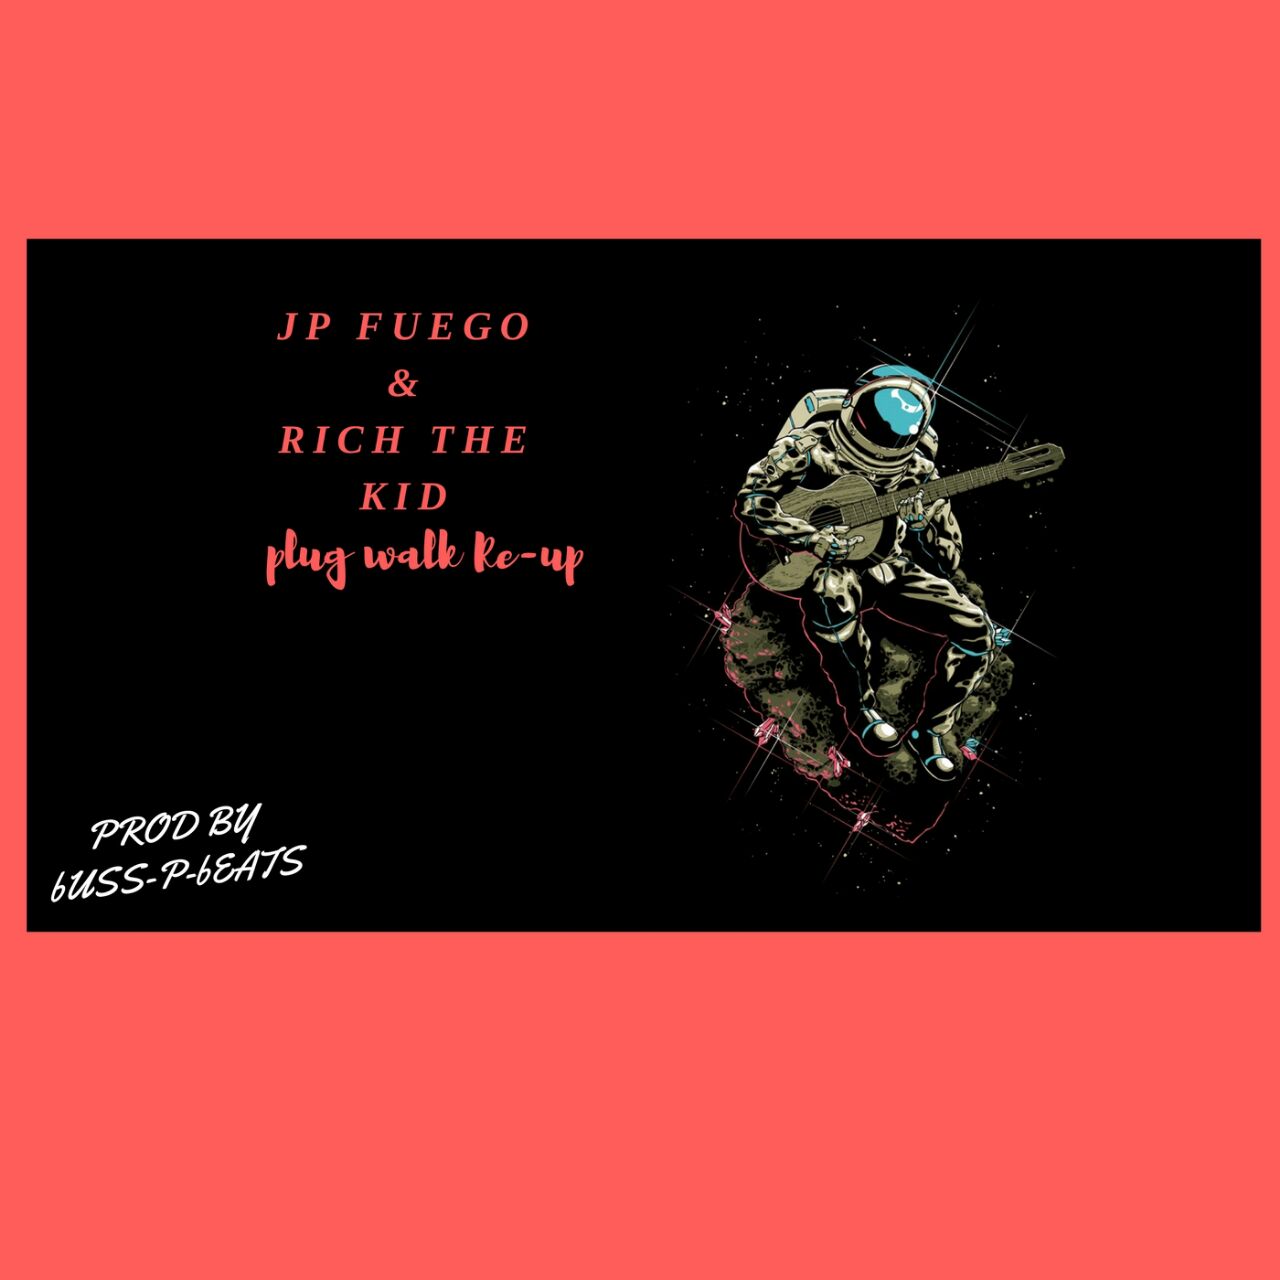 JP Fuego-Plug walk (Re-up) Lyrics